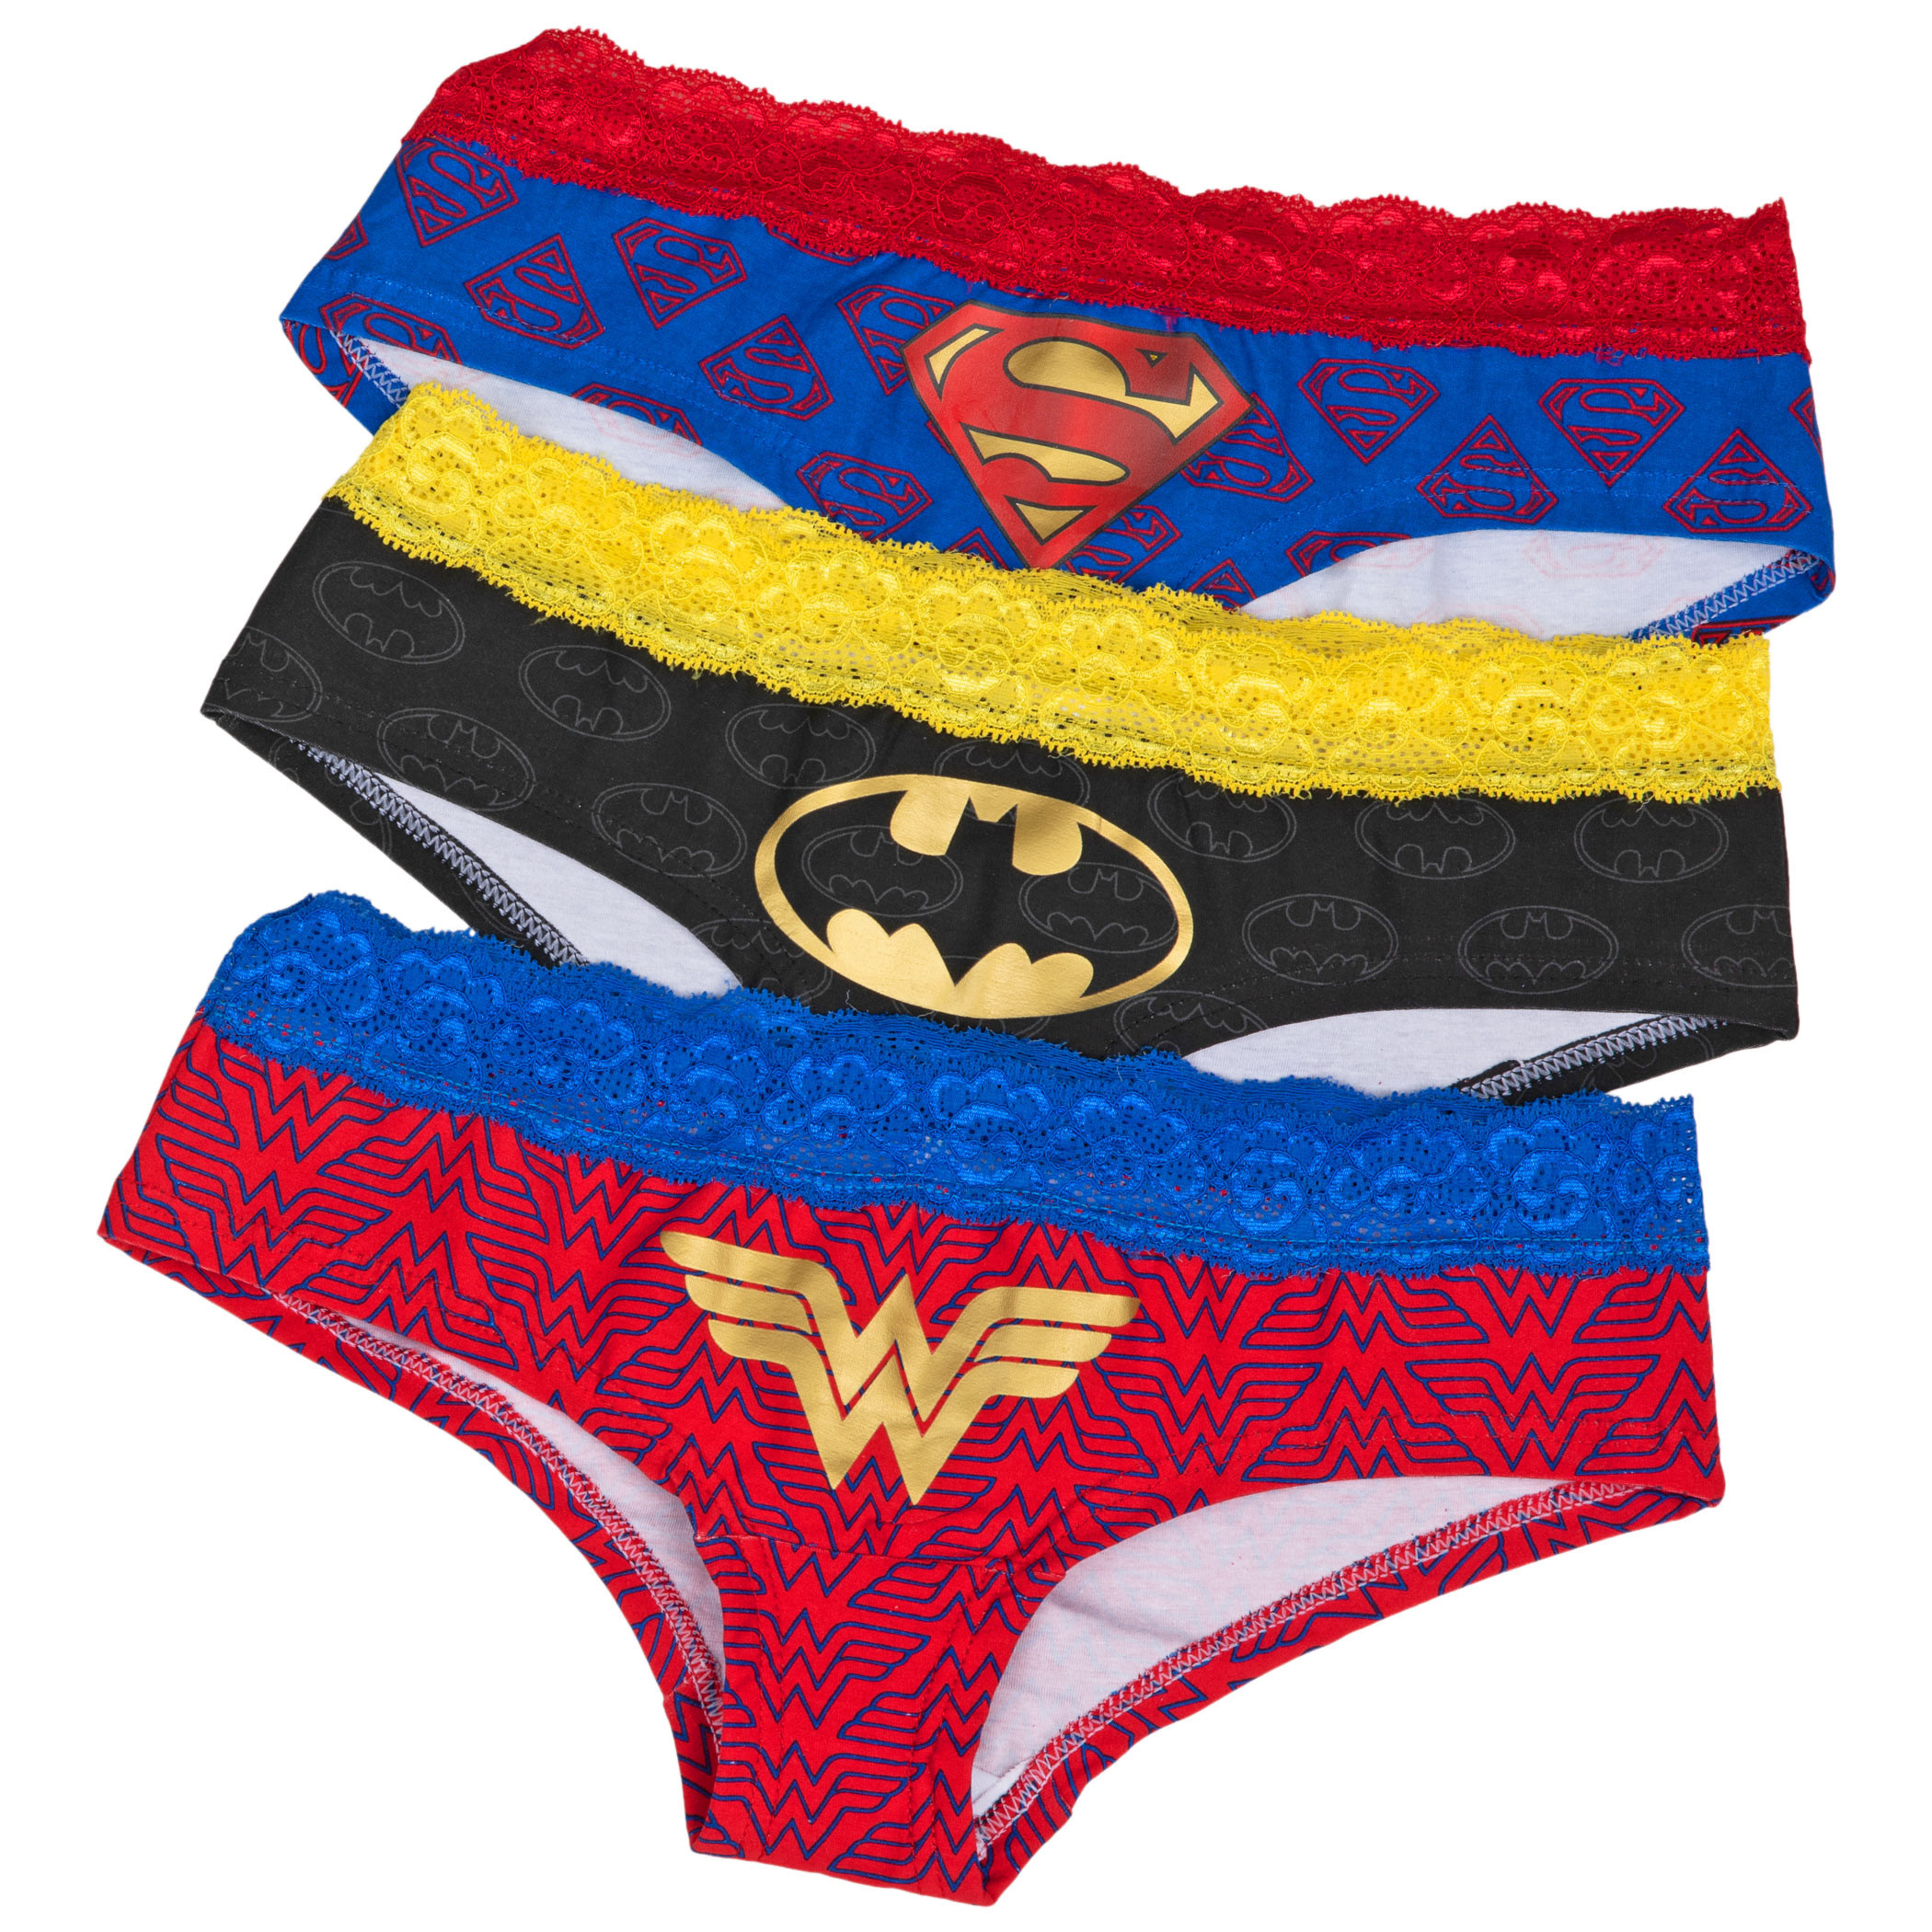 SUPERMAN All Over Print Black Lace Womens Underwear Panties Lingerie 